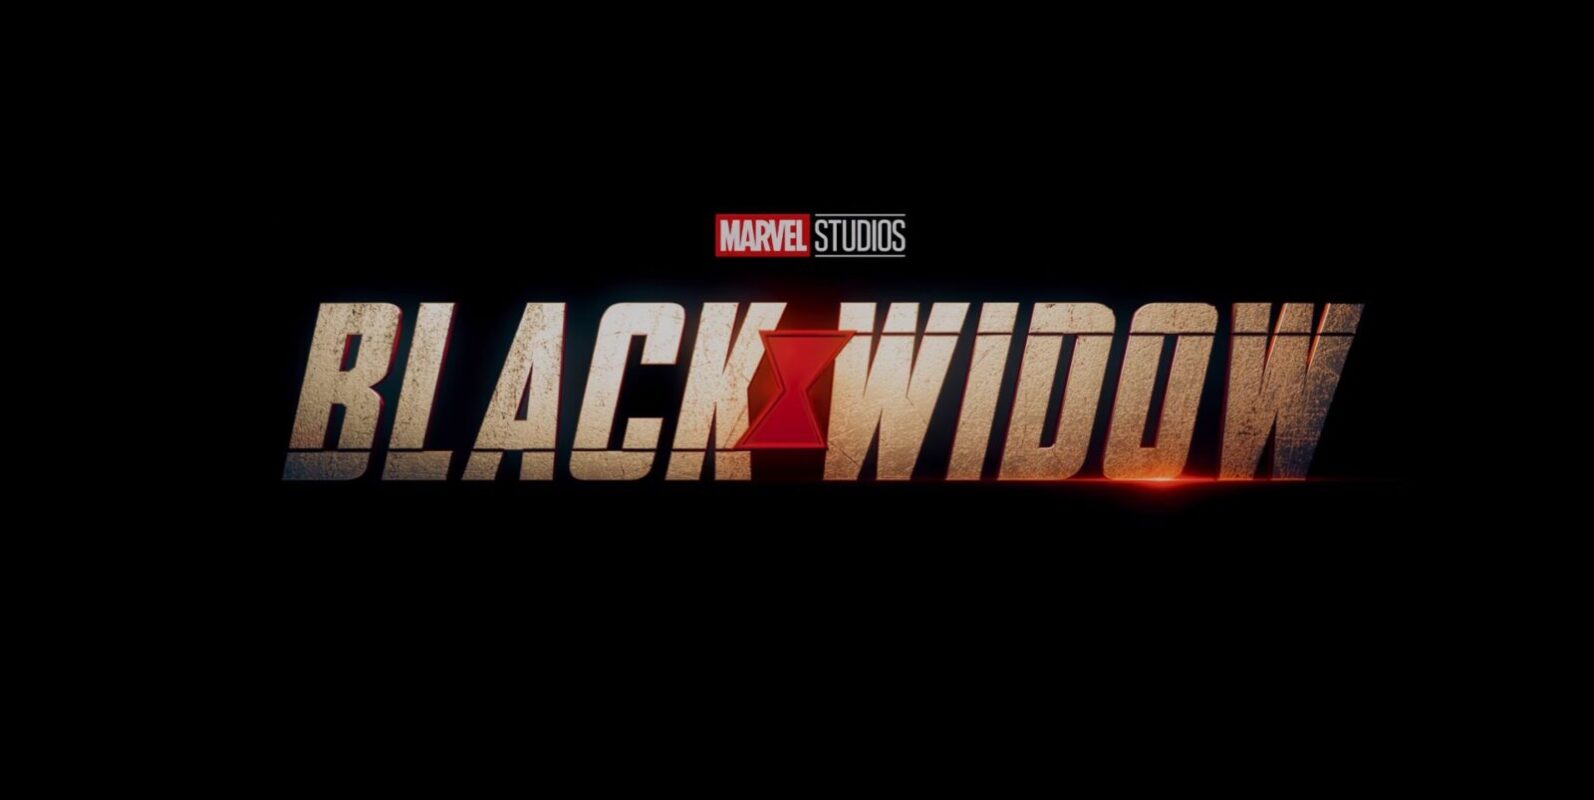 Black Widow uscita cinema